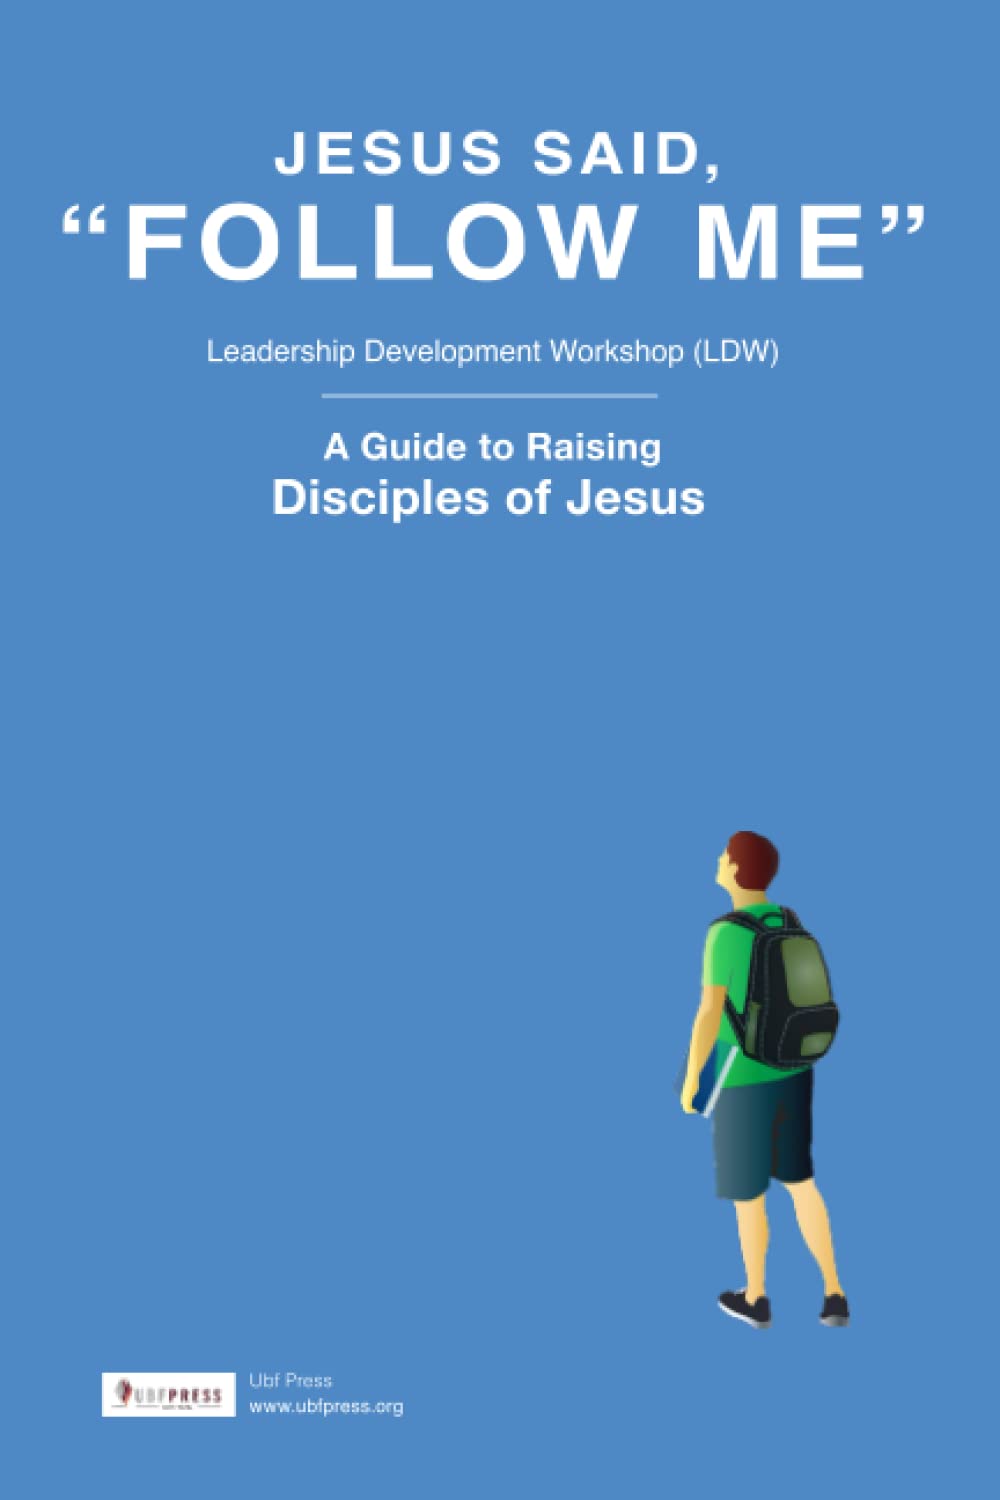 Jesus Said, "Follow Me": A Guide to Raising Disciples of Jesus